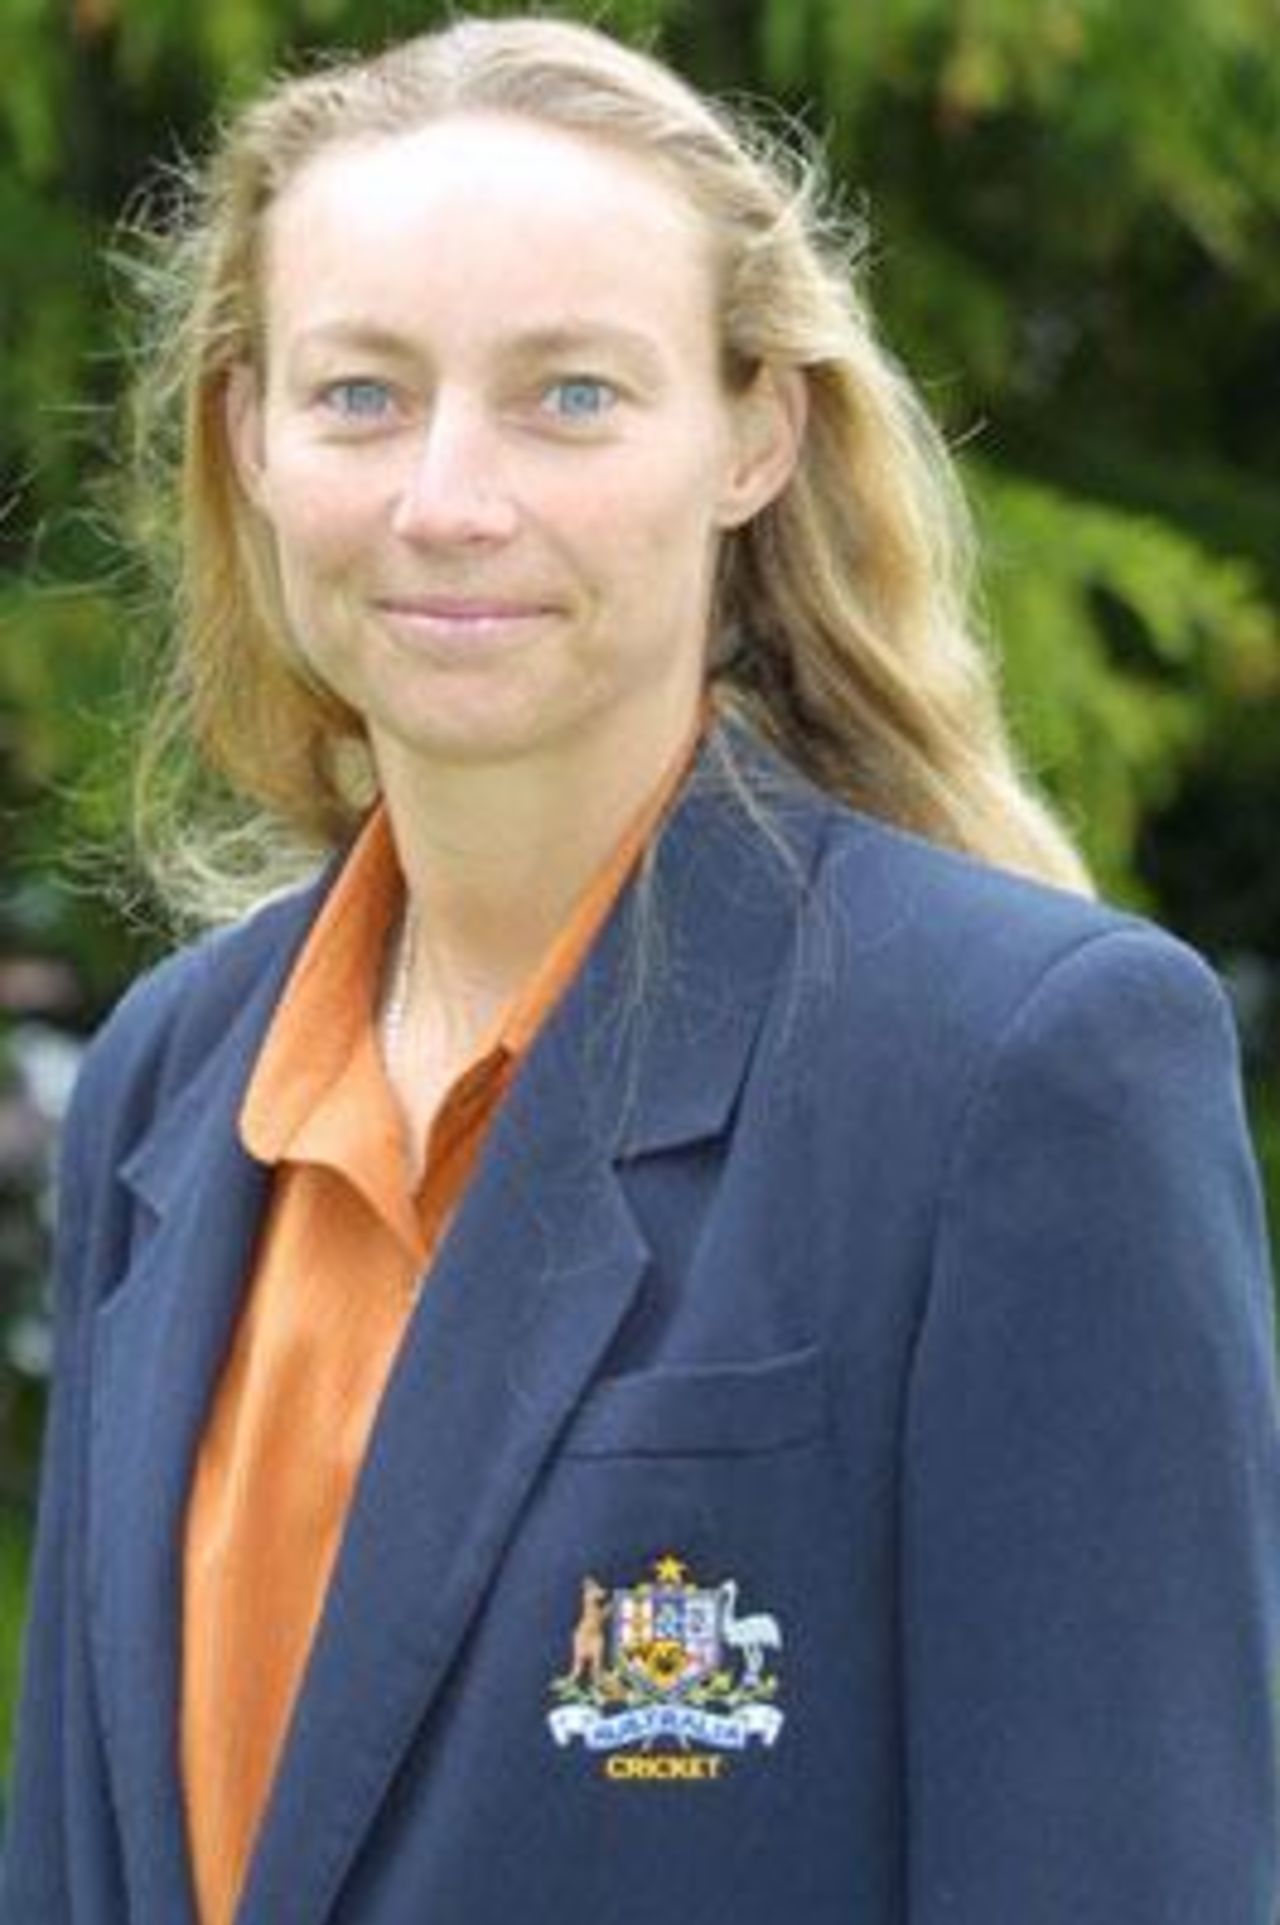 Portrait of Julia Price - Australia player in the CricInfo Women's World Cup 2000